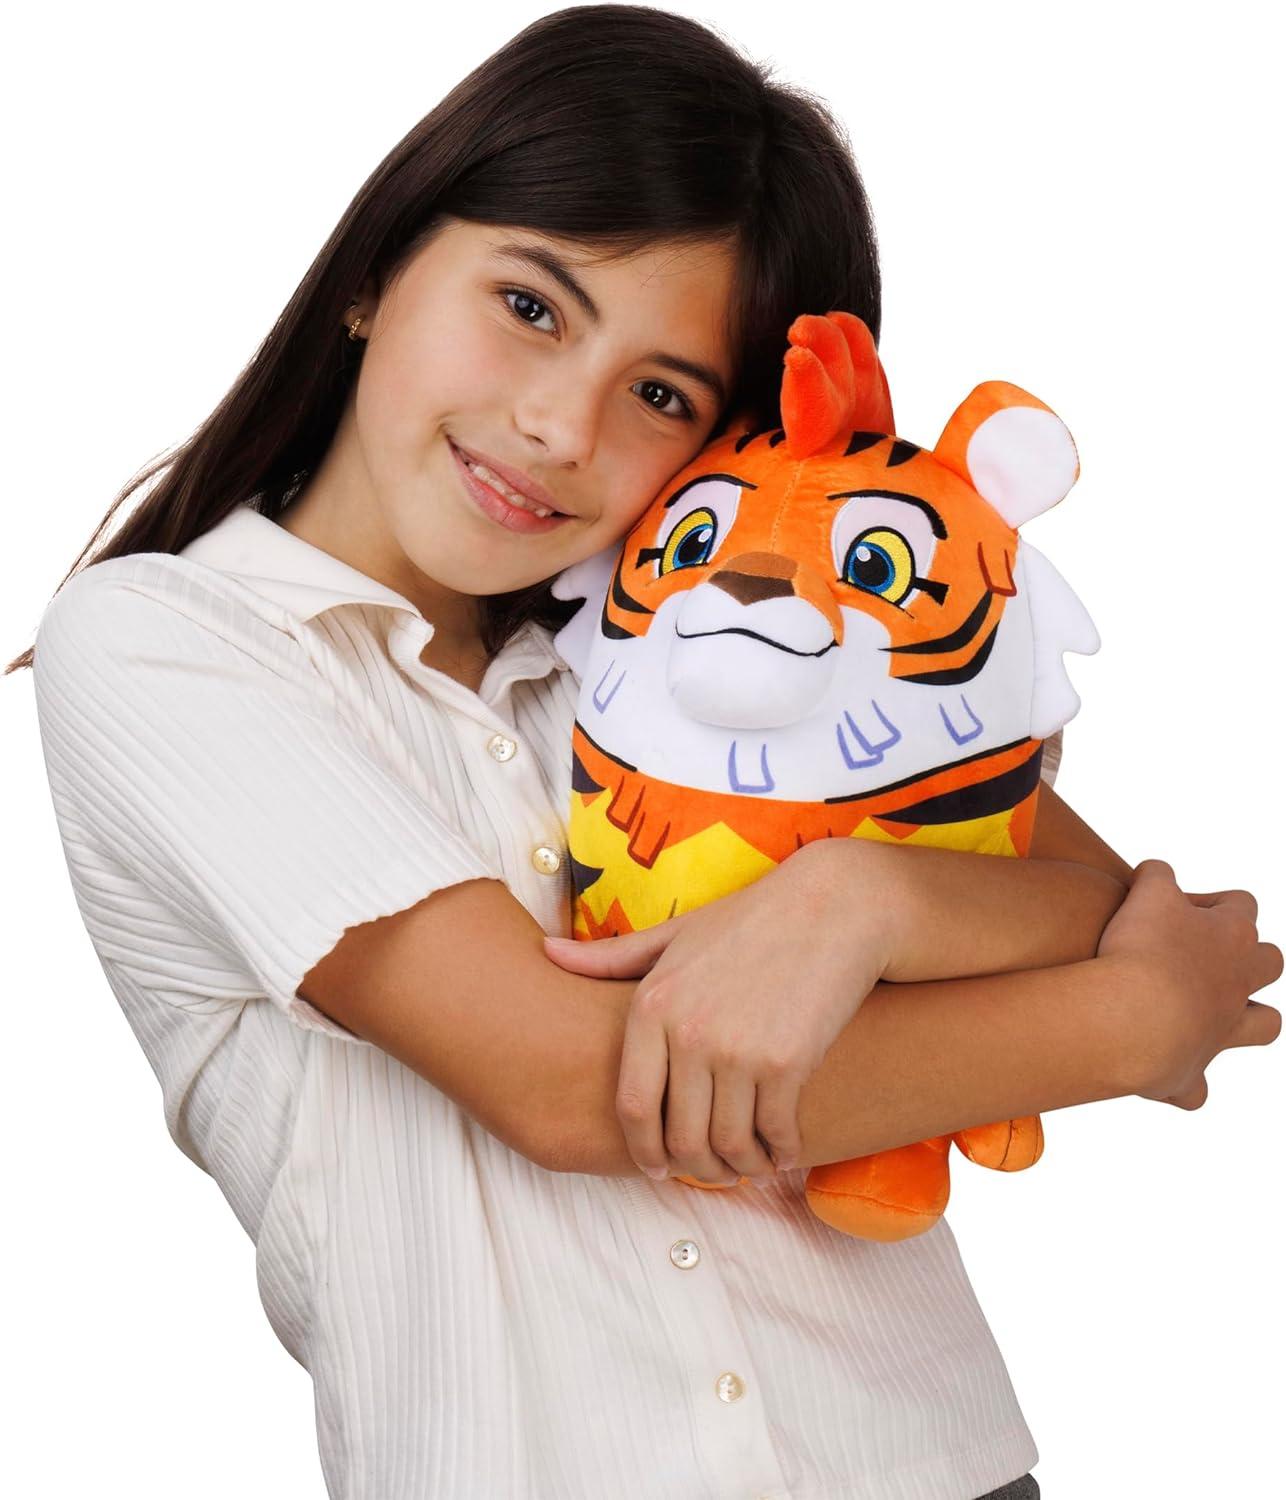 Pinata Smashlings Huggable Soft Plush Toy MO TIGER